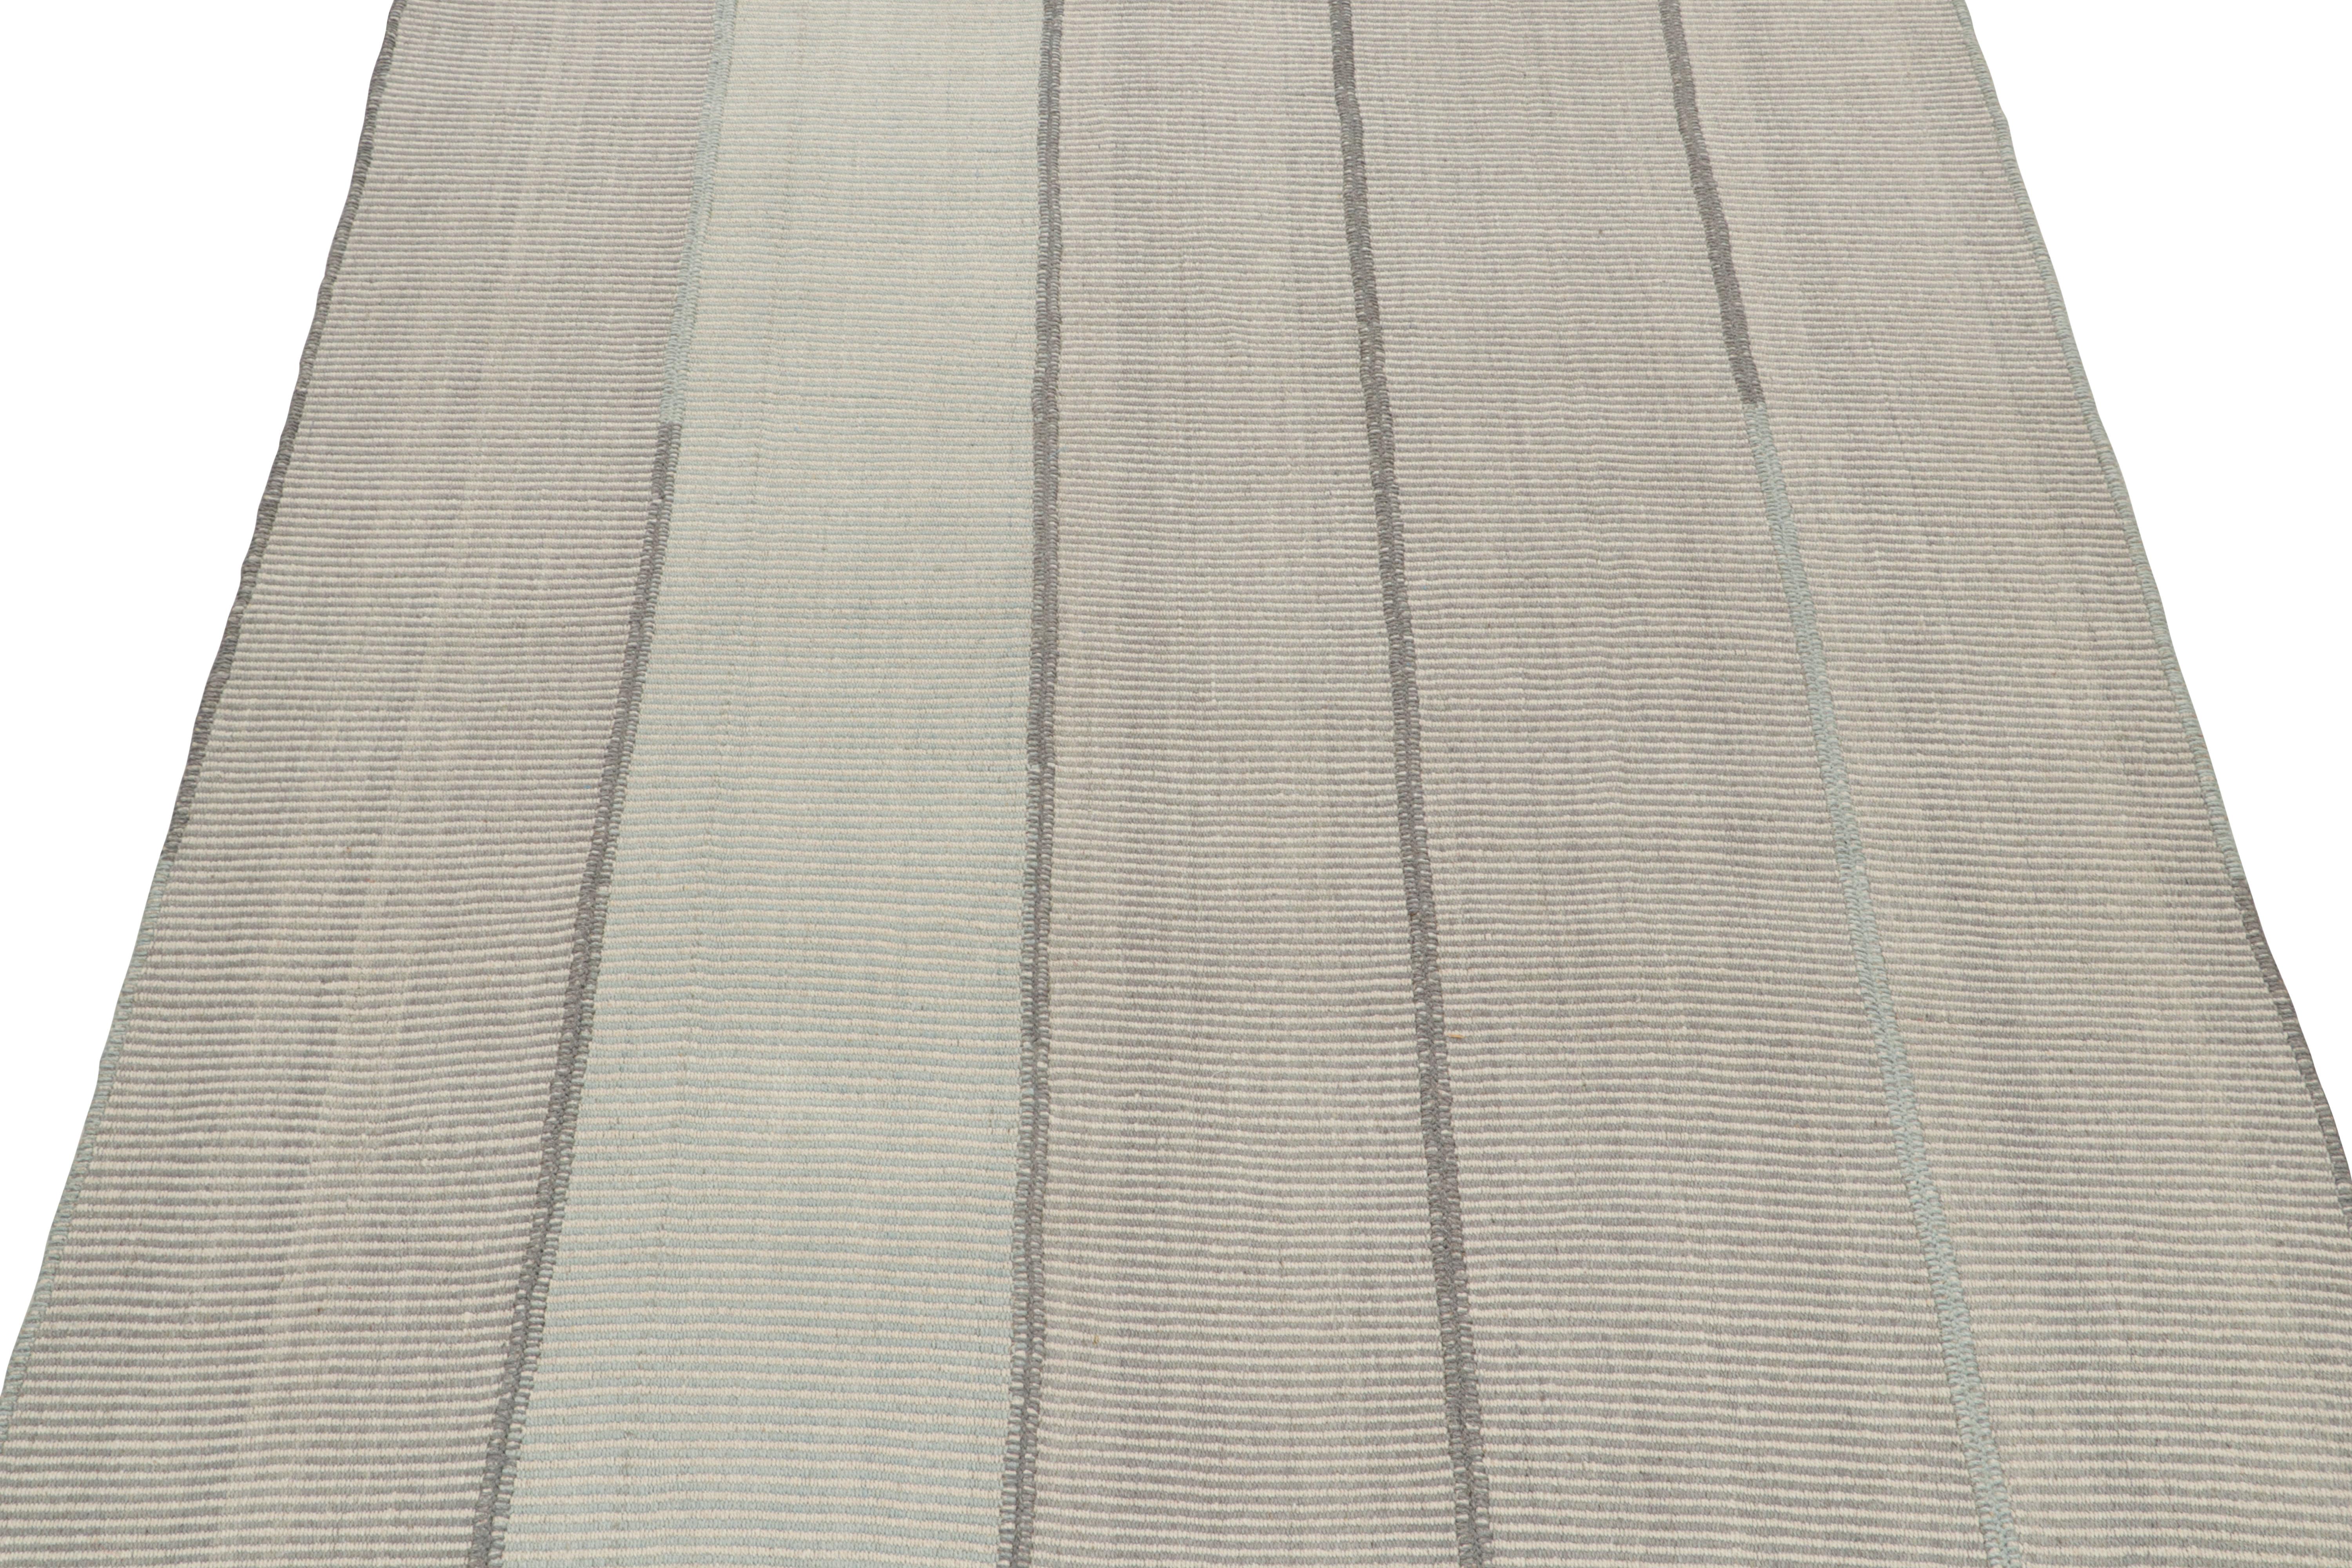 Rug & Kilim's Contemporary Kilim in Blau, Grau und Weiß (Handgewebt) im Angebot